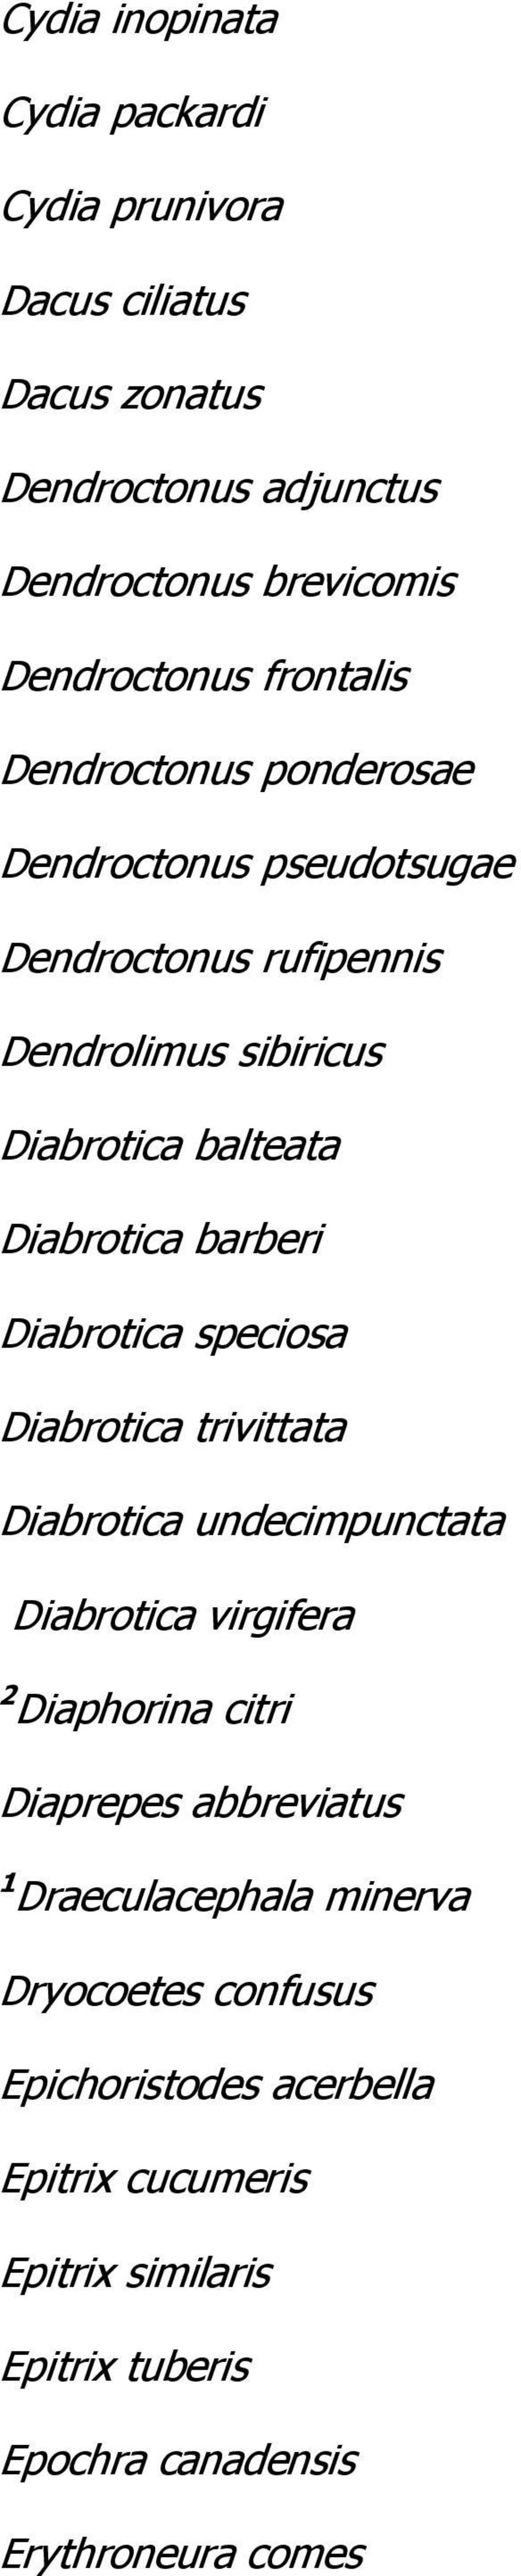 barberi Diabrotica speciosa Diabrotica trivittata Diabrotica undecimpunctata Diabrotica virgifera 2 Diaphorina citri Diaprepes abbreviatus 1